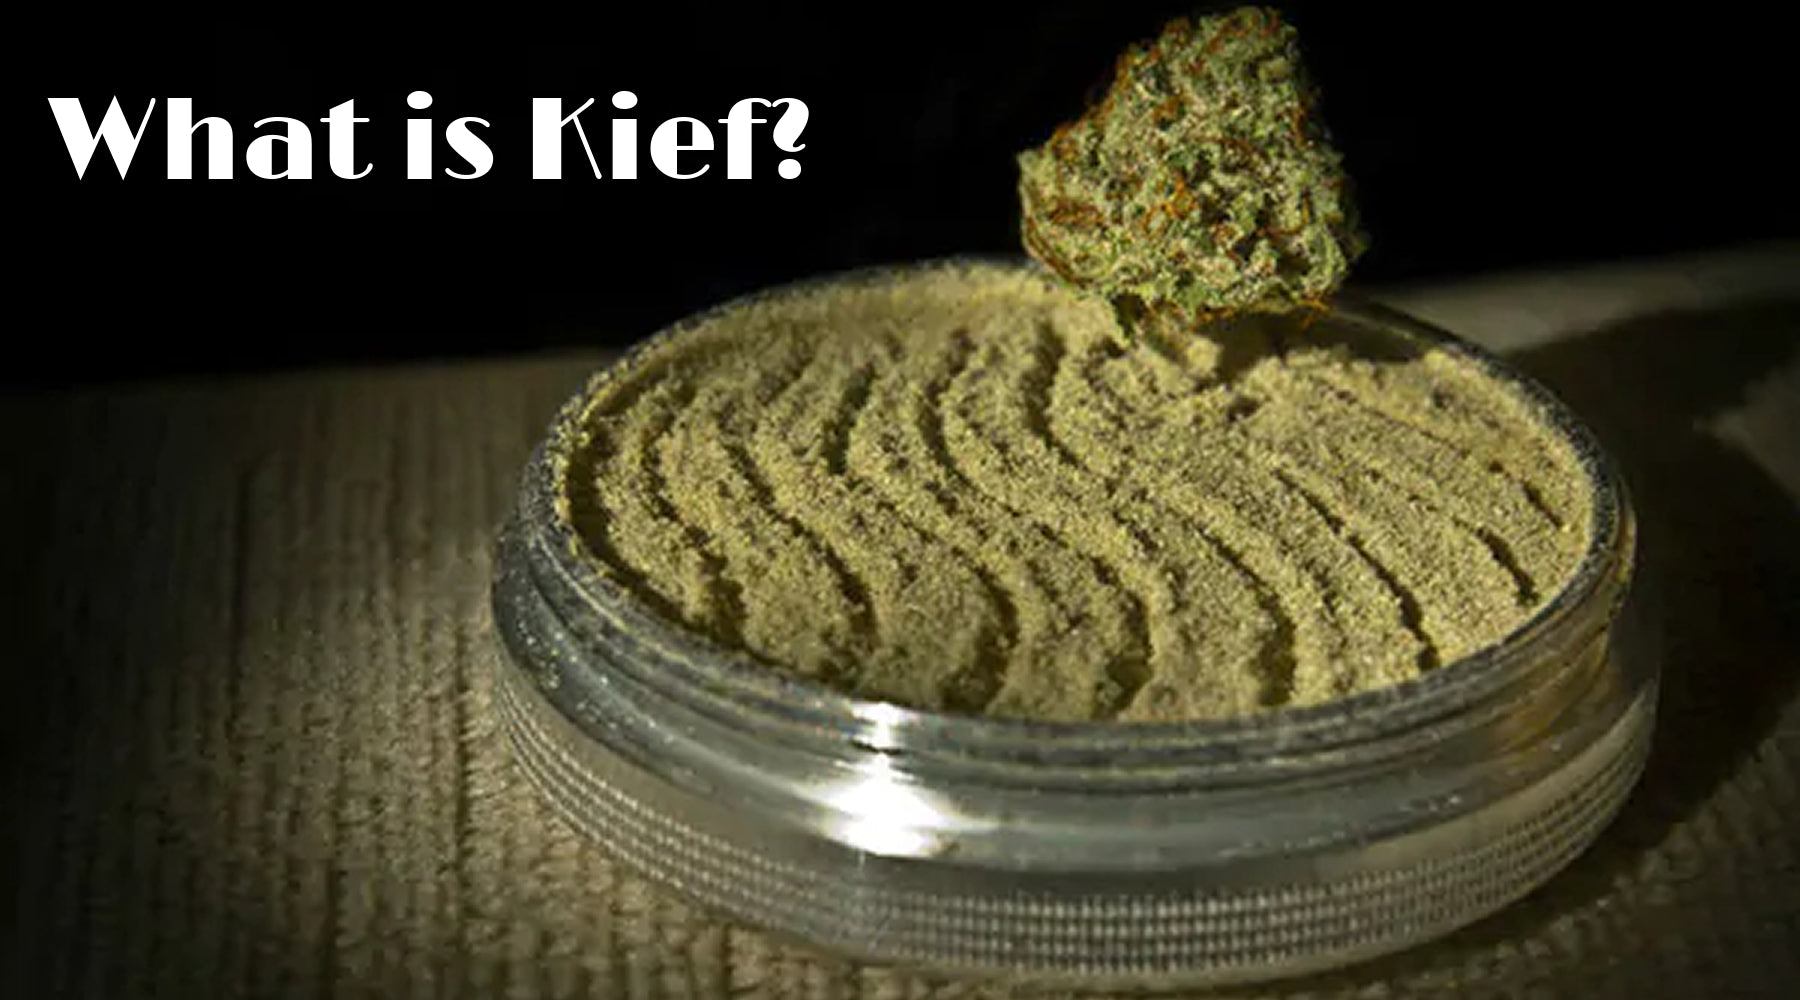 What is Kief?